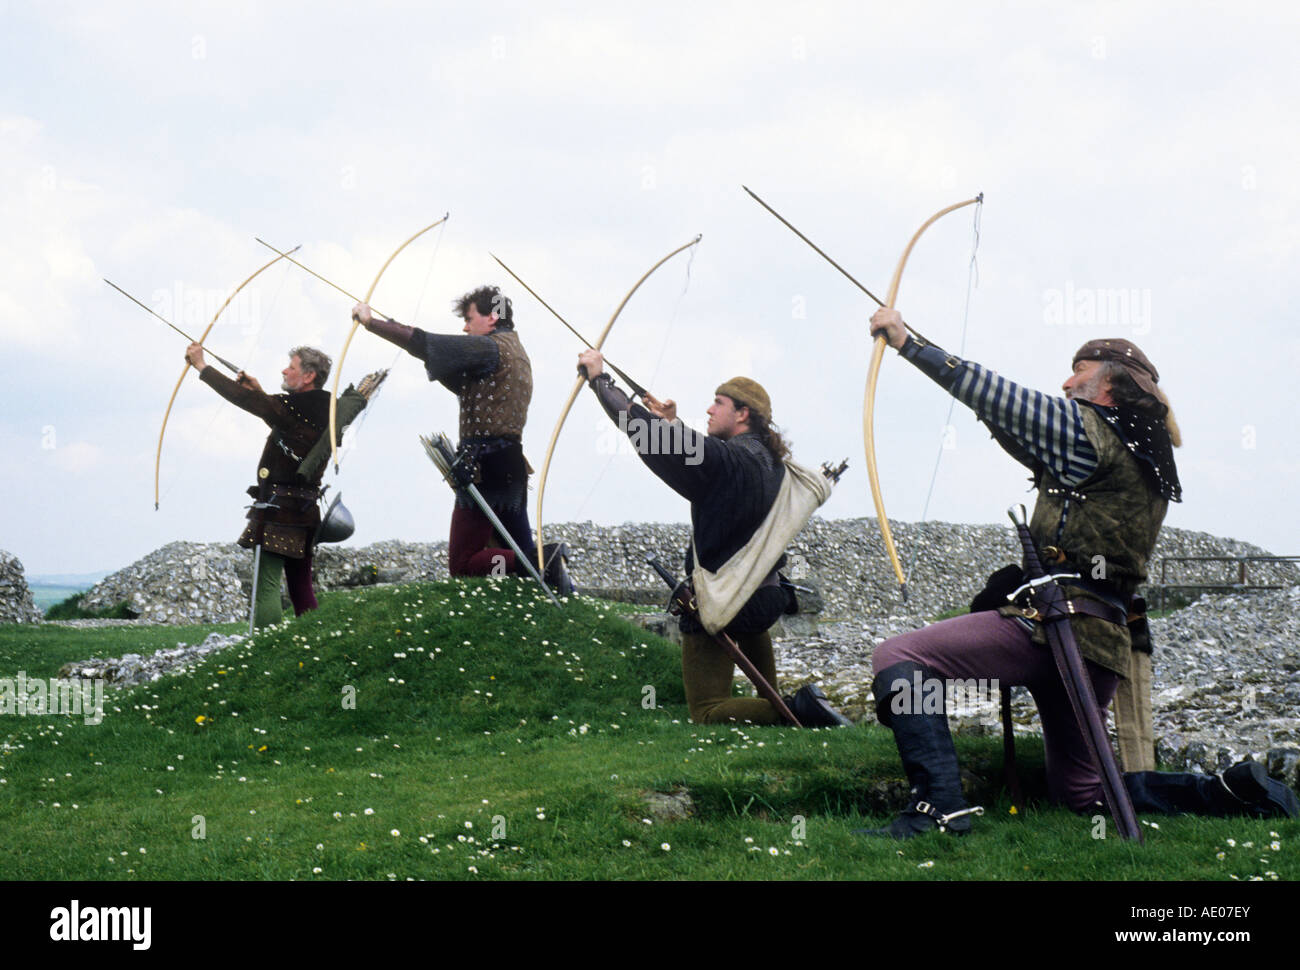 Medieval archers bowman bow and arrow bowmen long bowsEngland, UK, re-enactment, history, English historical, archers, archery, Stock Photo